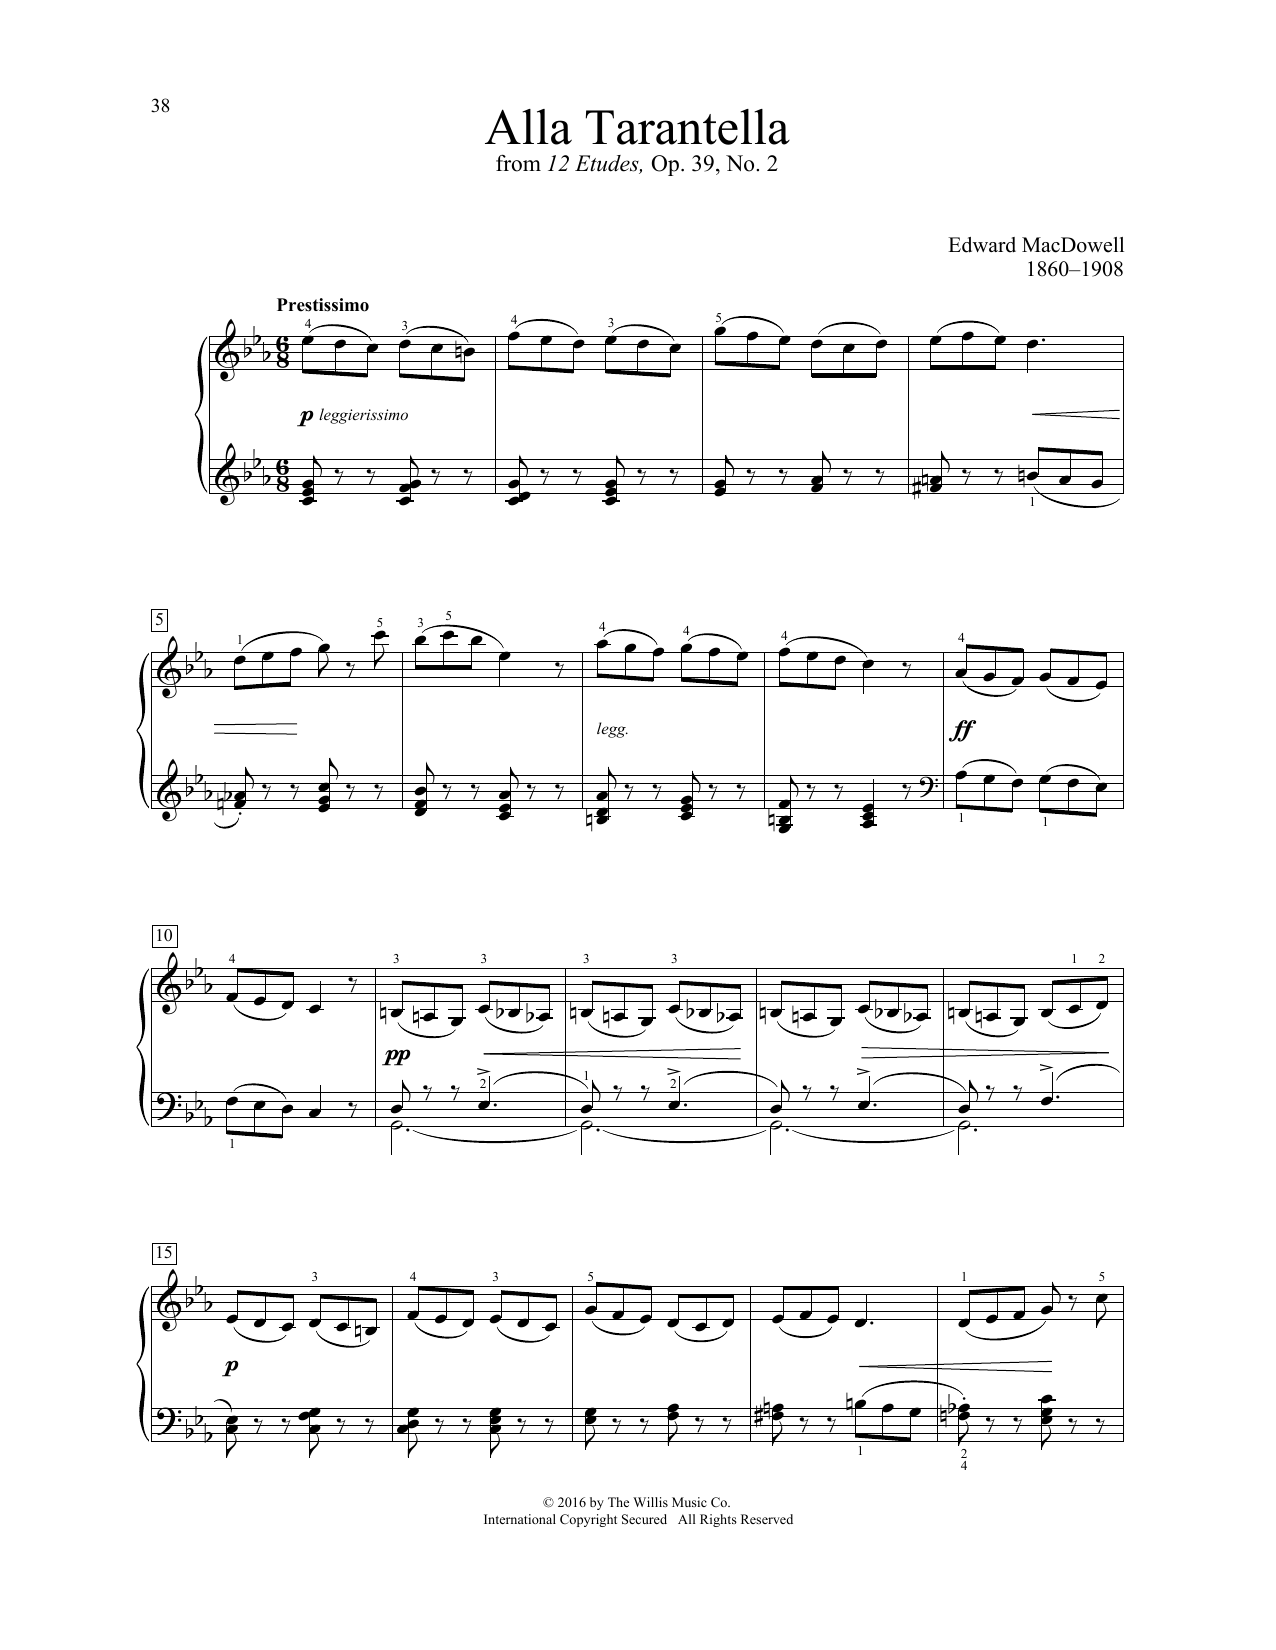 Edward MacDowell Alla Tarantella Sheet Music Notes & Chords for Educational Piano - Download or Print PDF